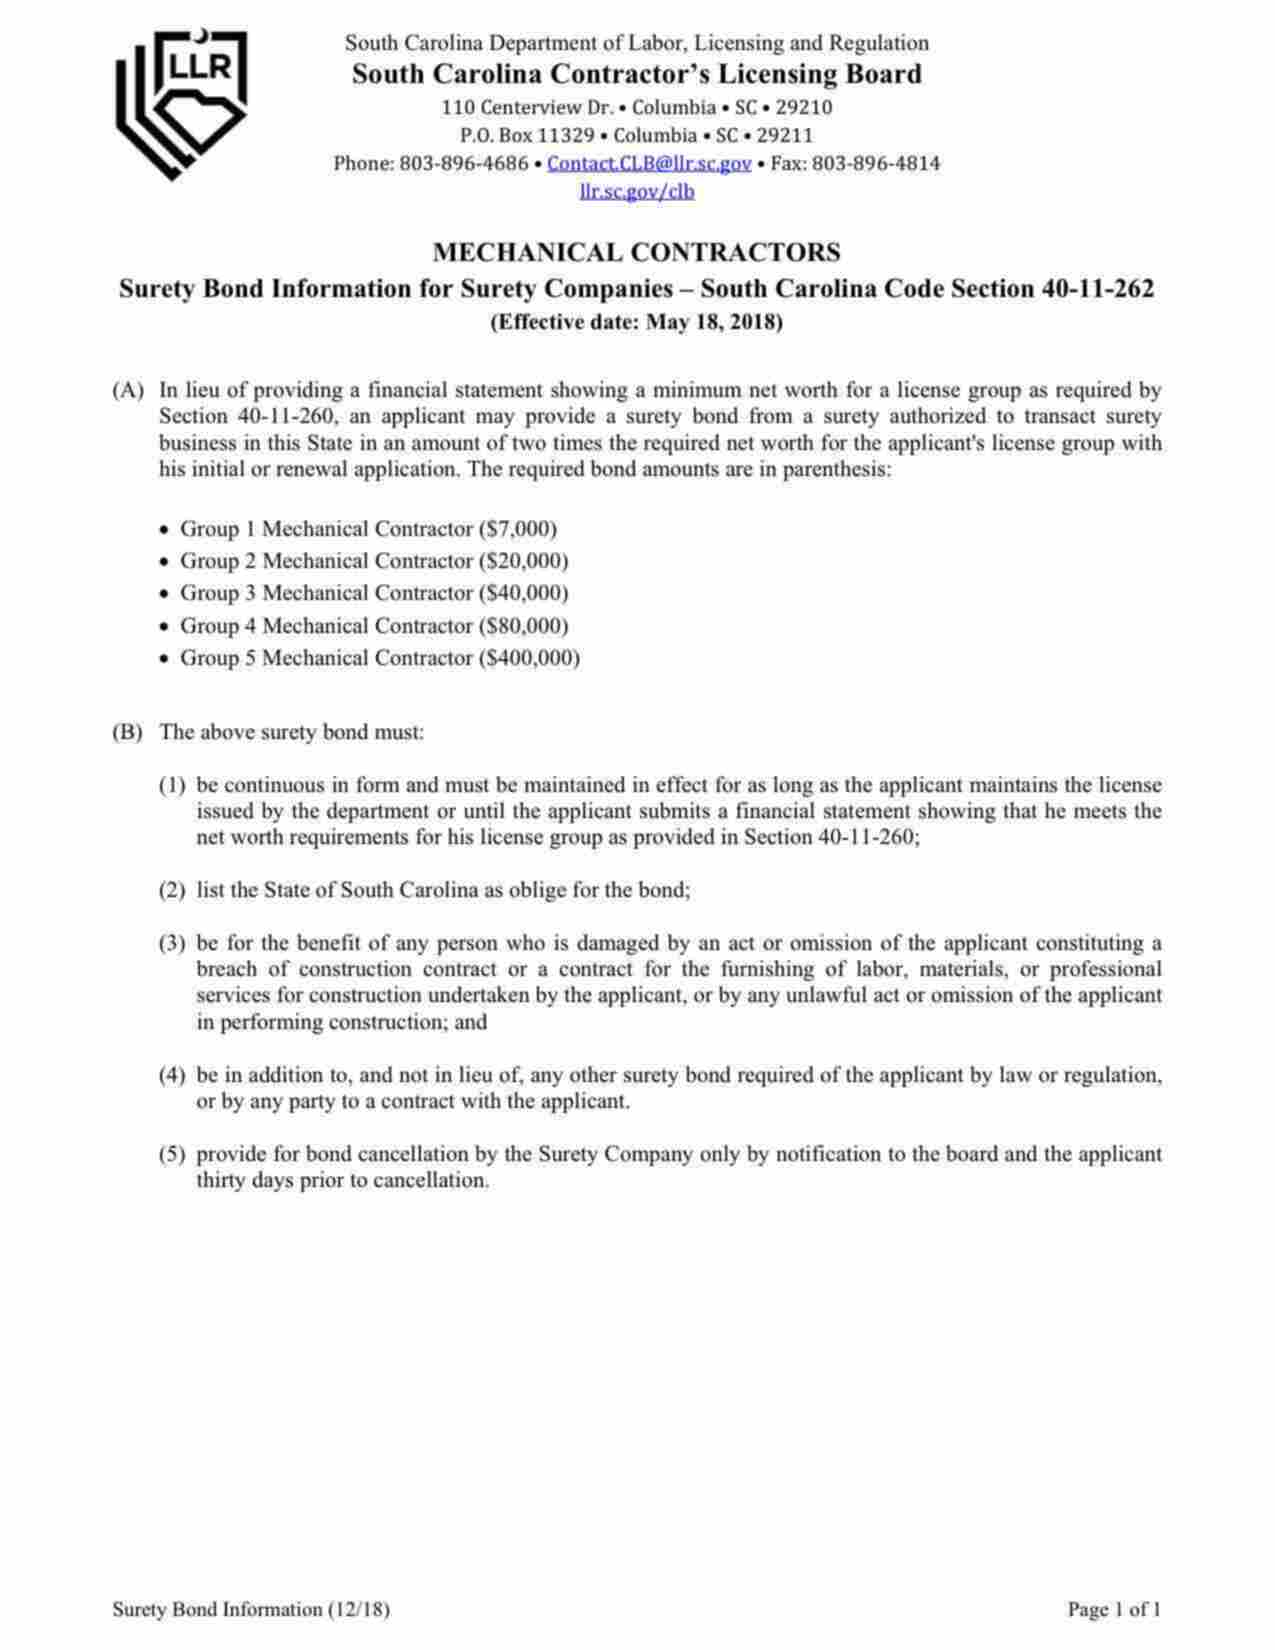 South Carolina Mechanical Contractor (Group 1) Bond Form